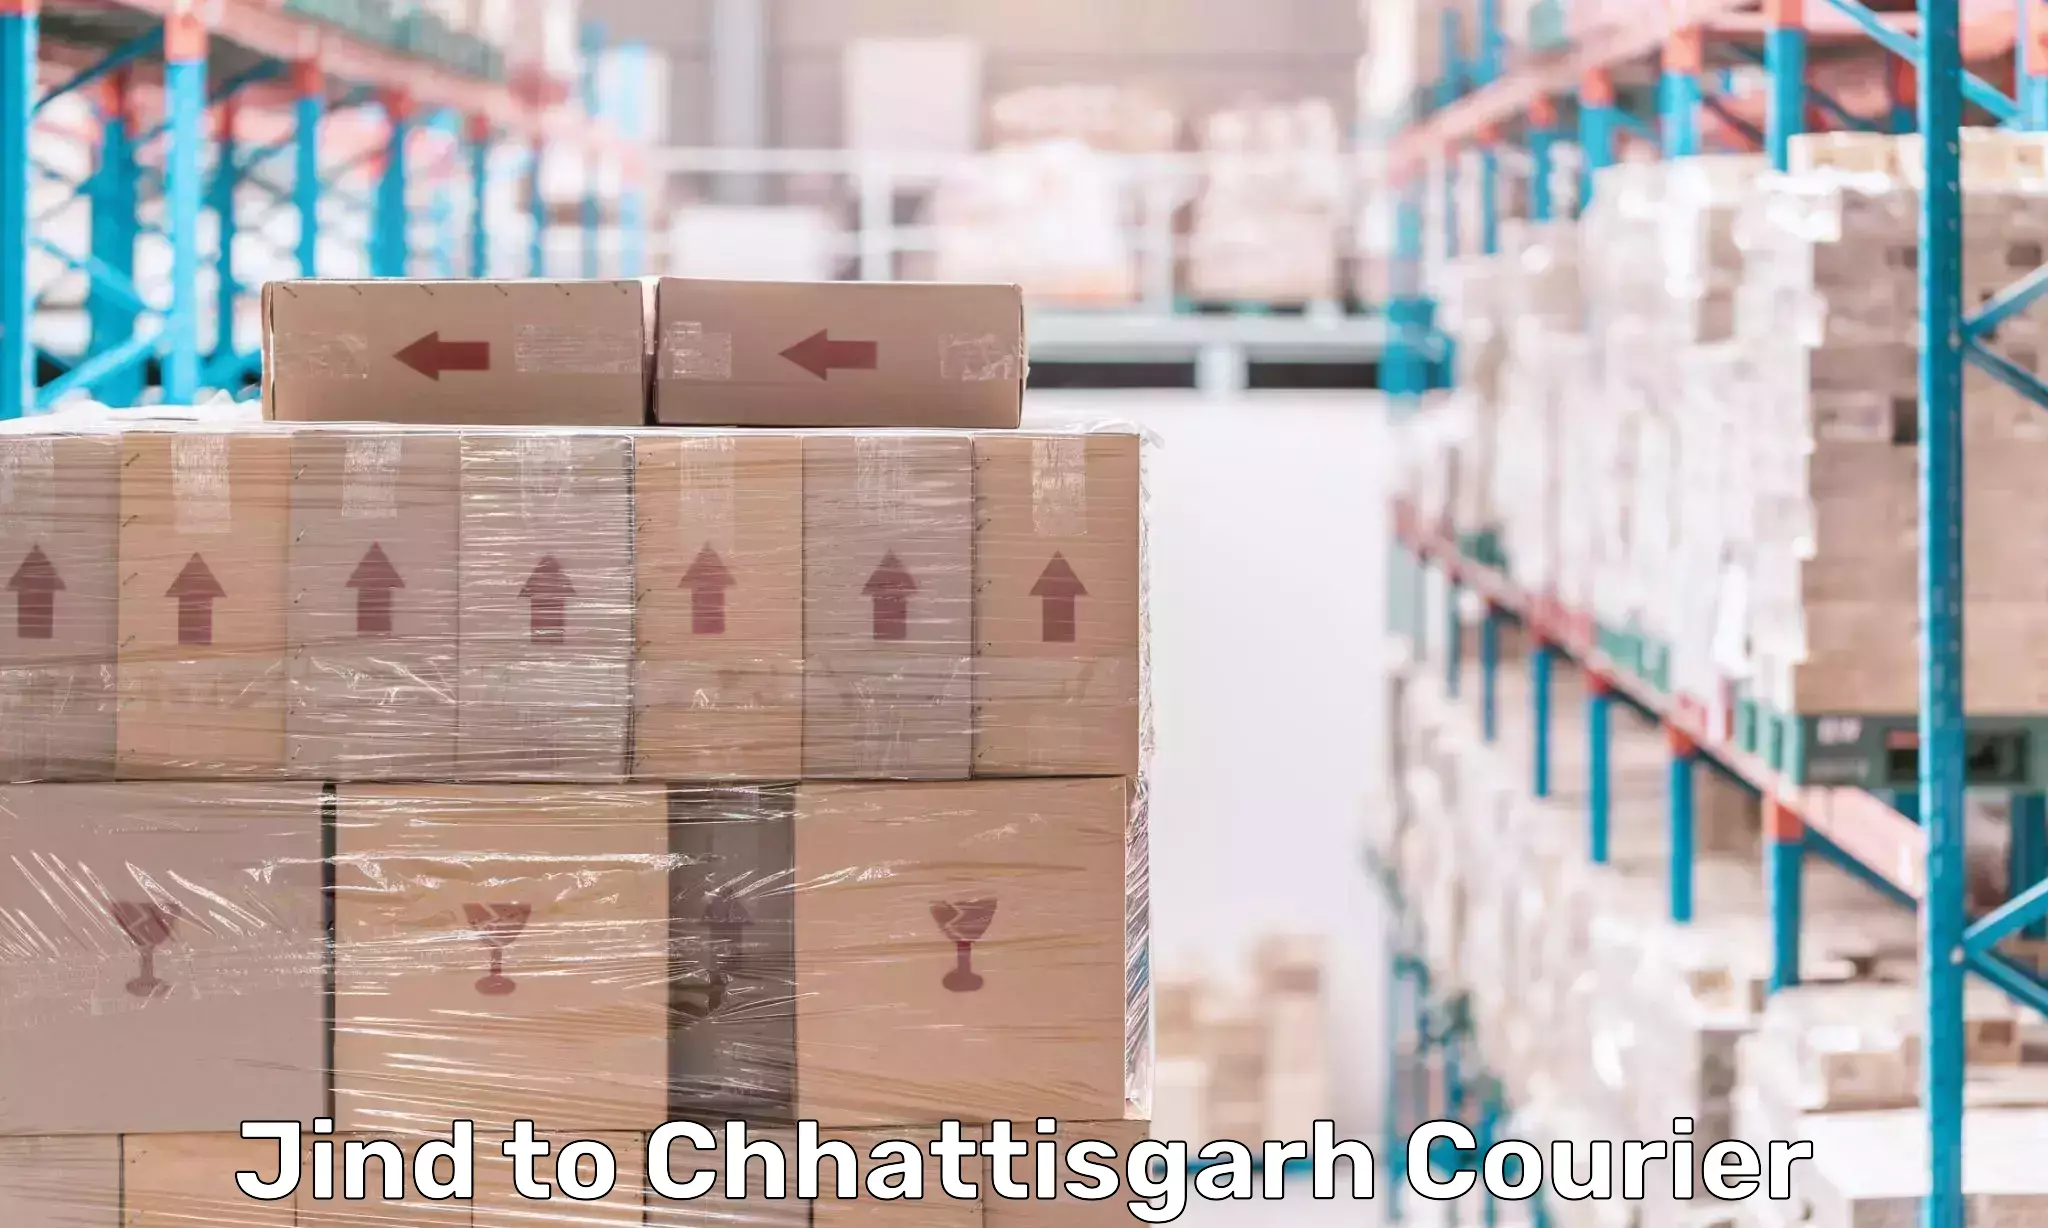 Courier service comparison Jind to Raigarh Chhattisgarh